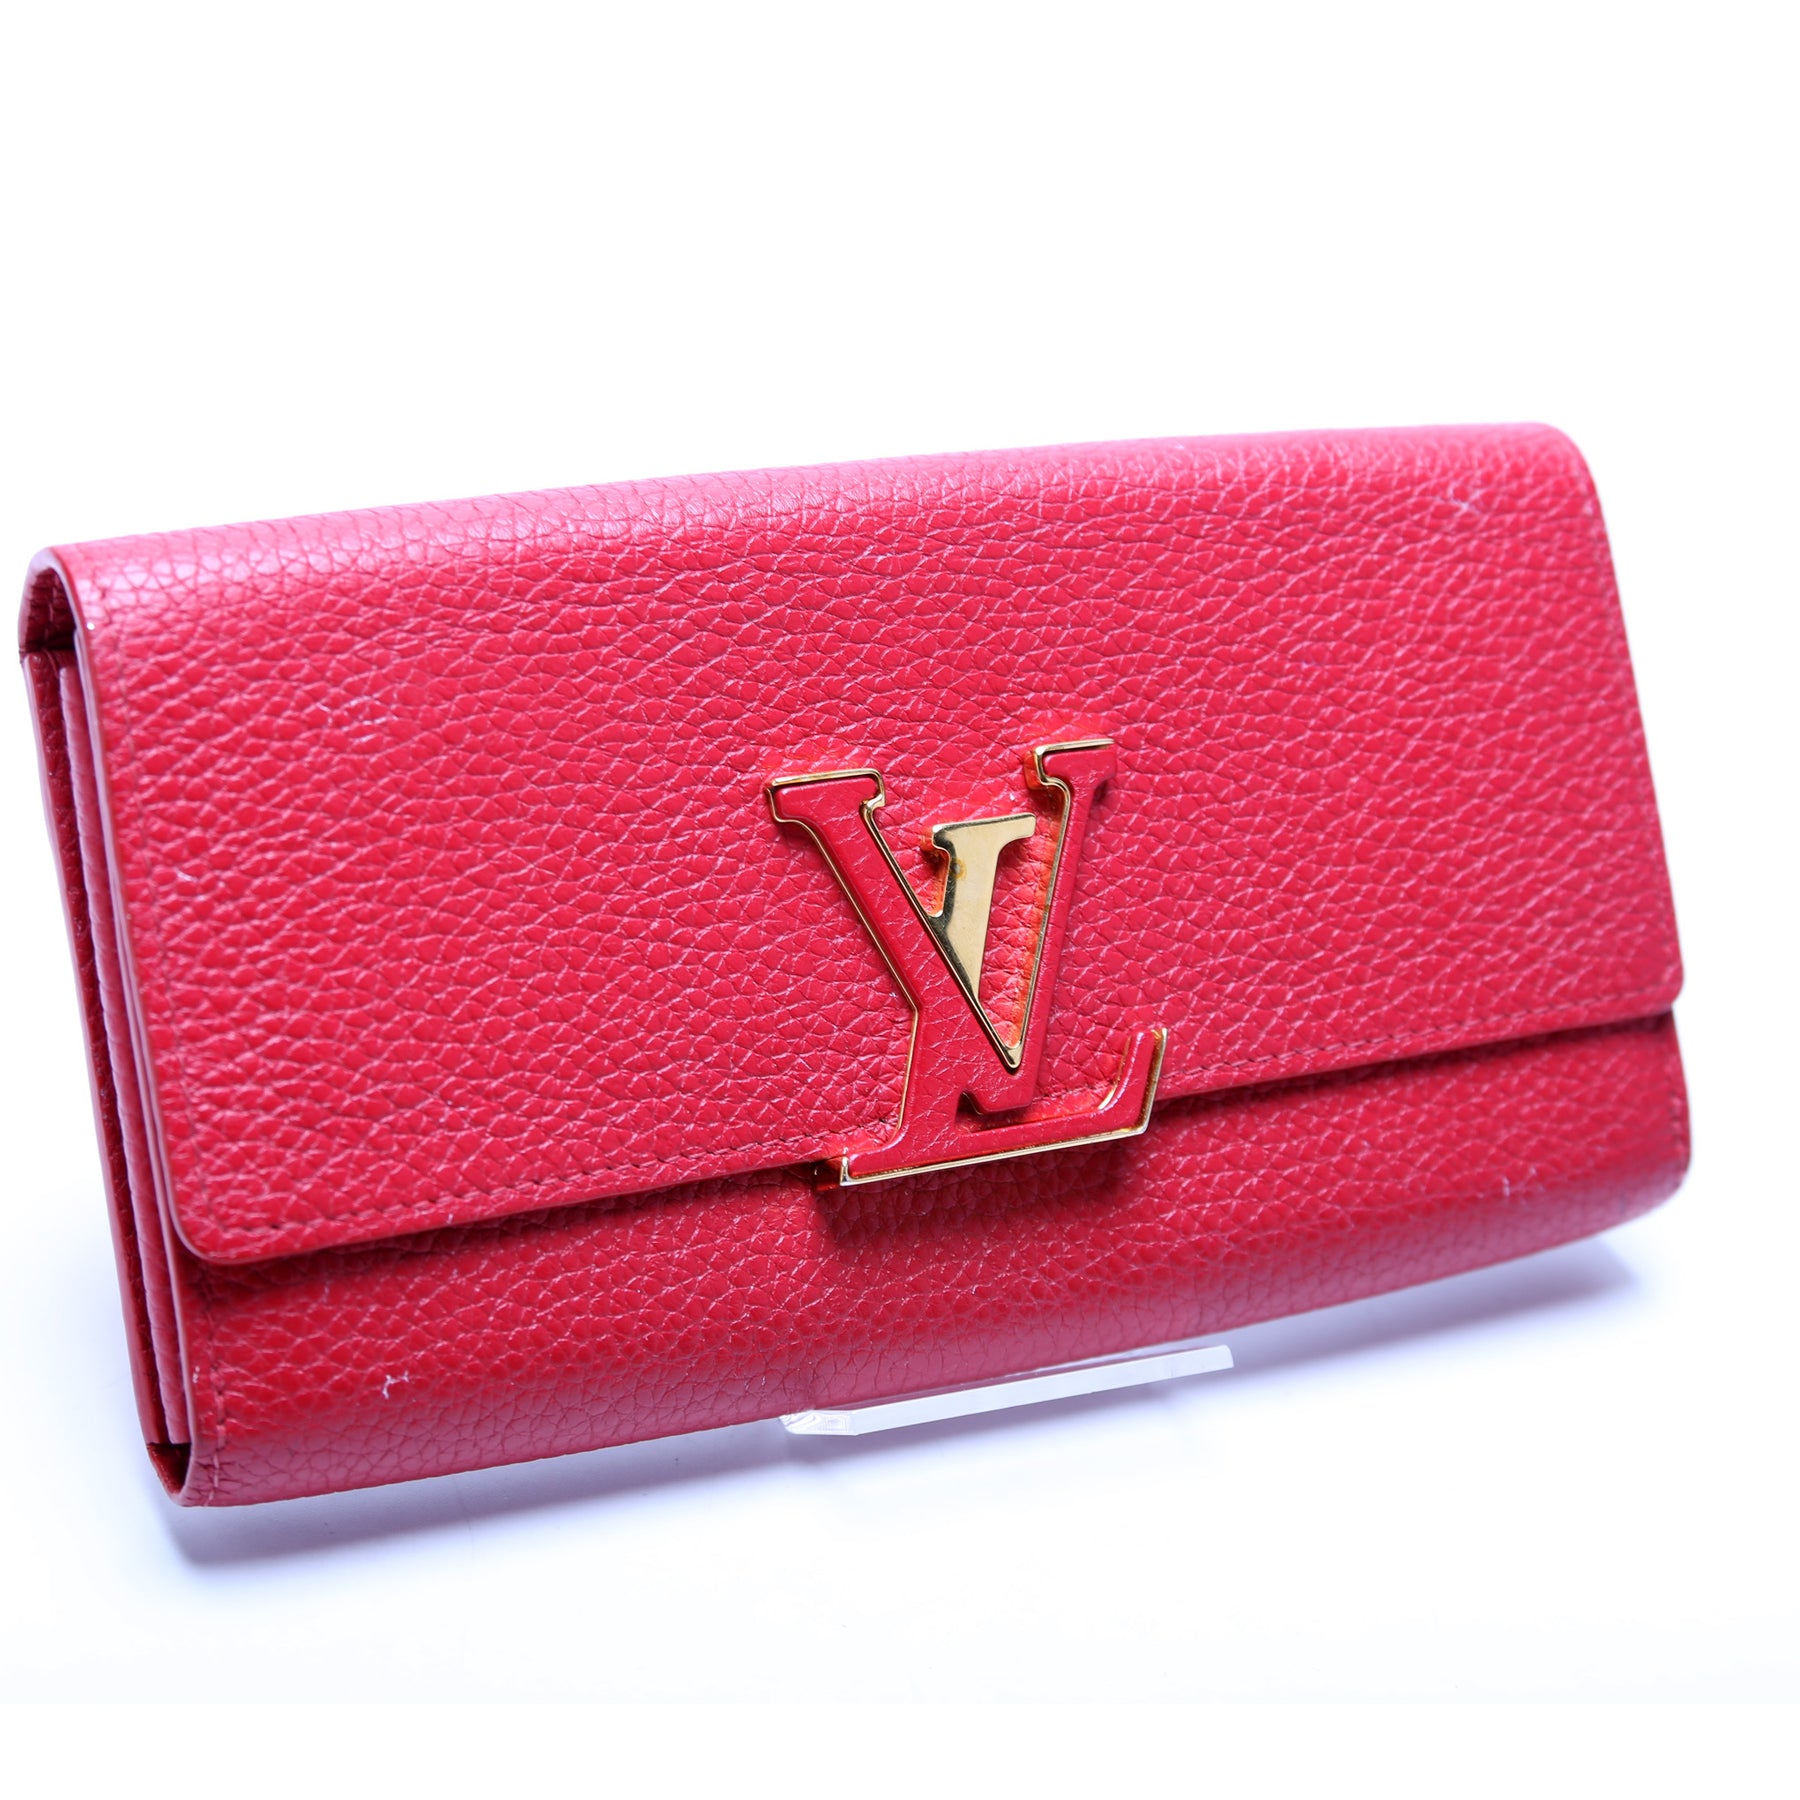 Louis Vuitton - Authenticated Capucines Handbag - Leather Red Plain for Women, Good Condition